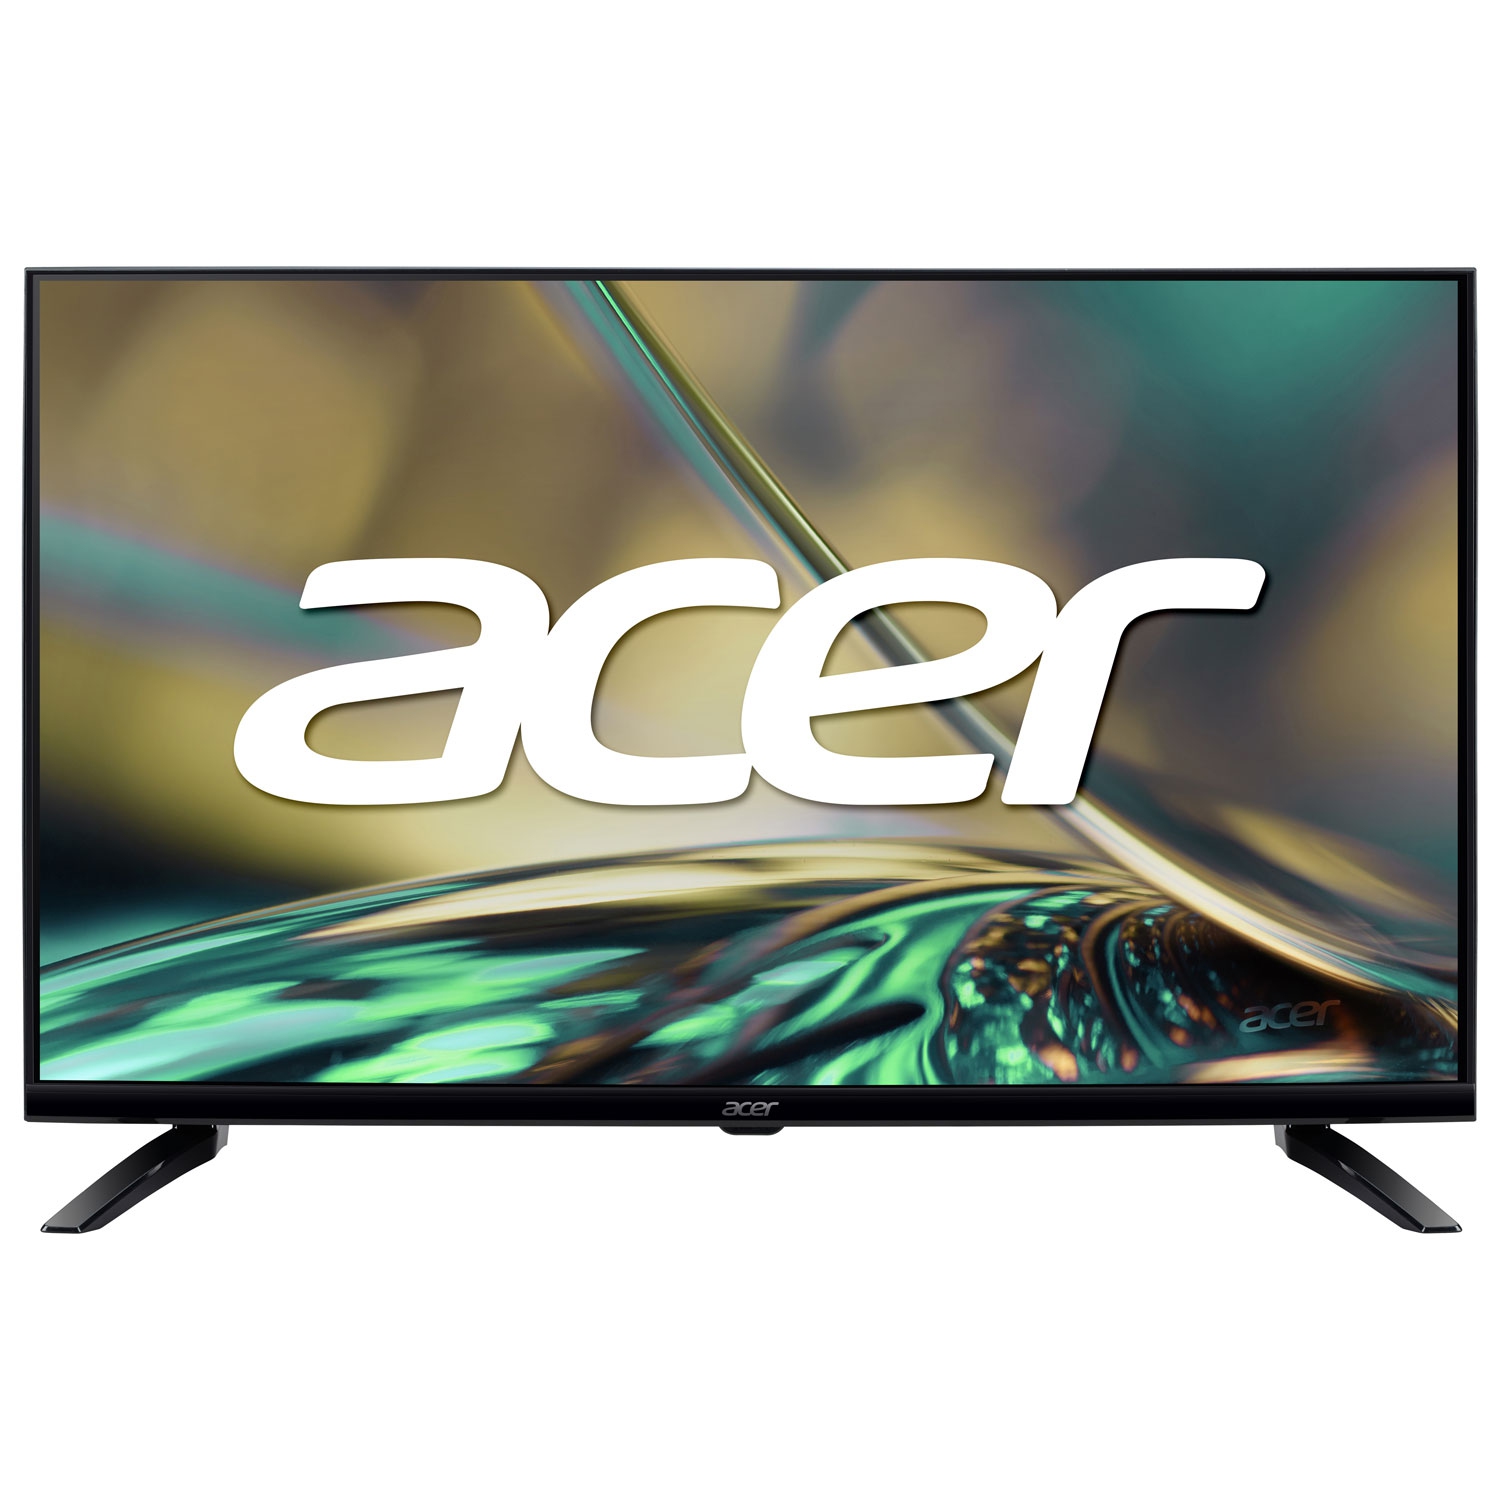 Acer 31.5" HD Smart VA Monitor (DA320Q bemiiixw) - Manufacturer ReCertified w/ 1 Year Warranty